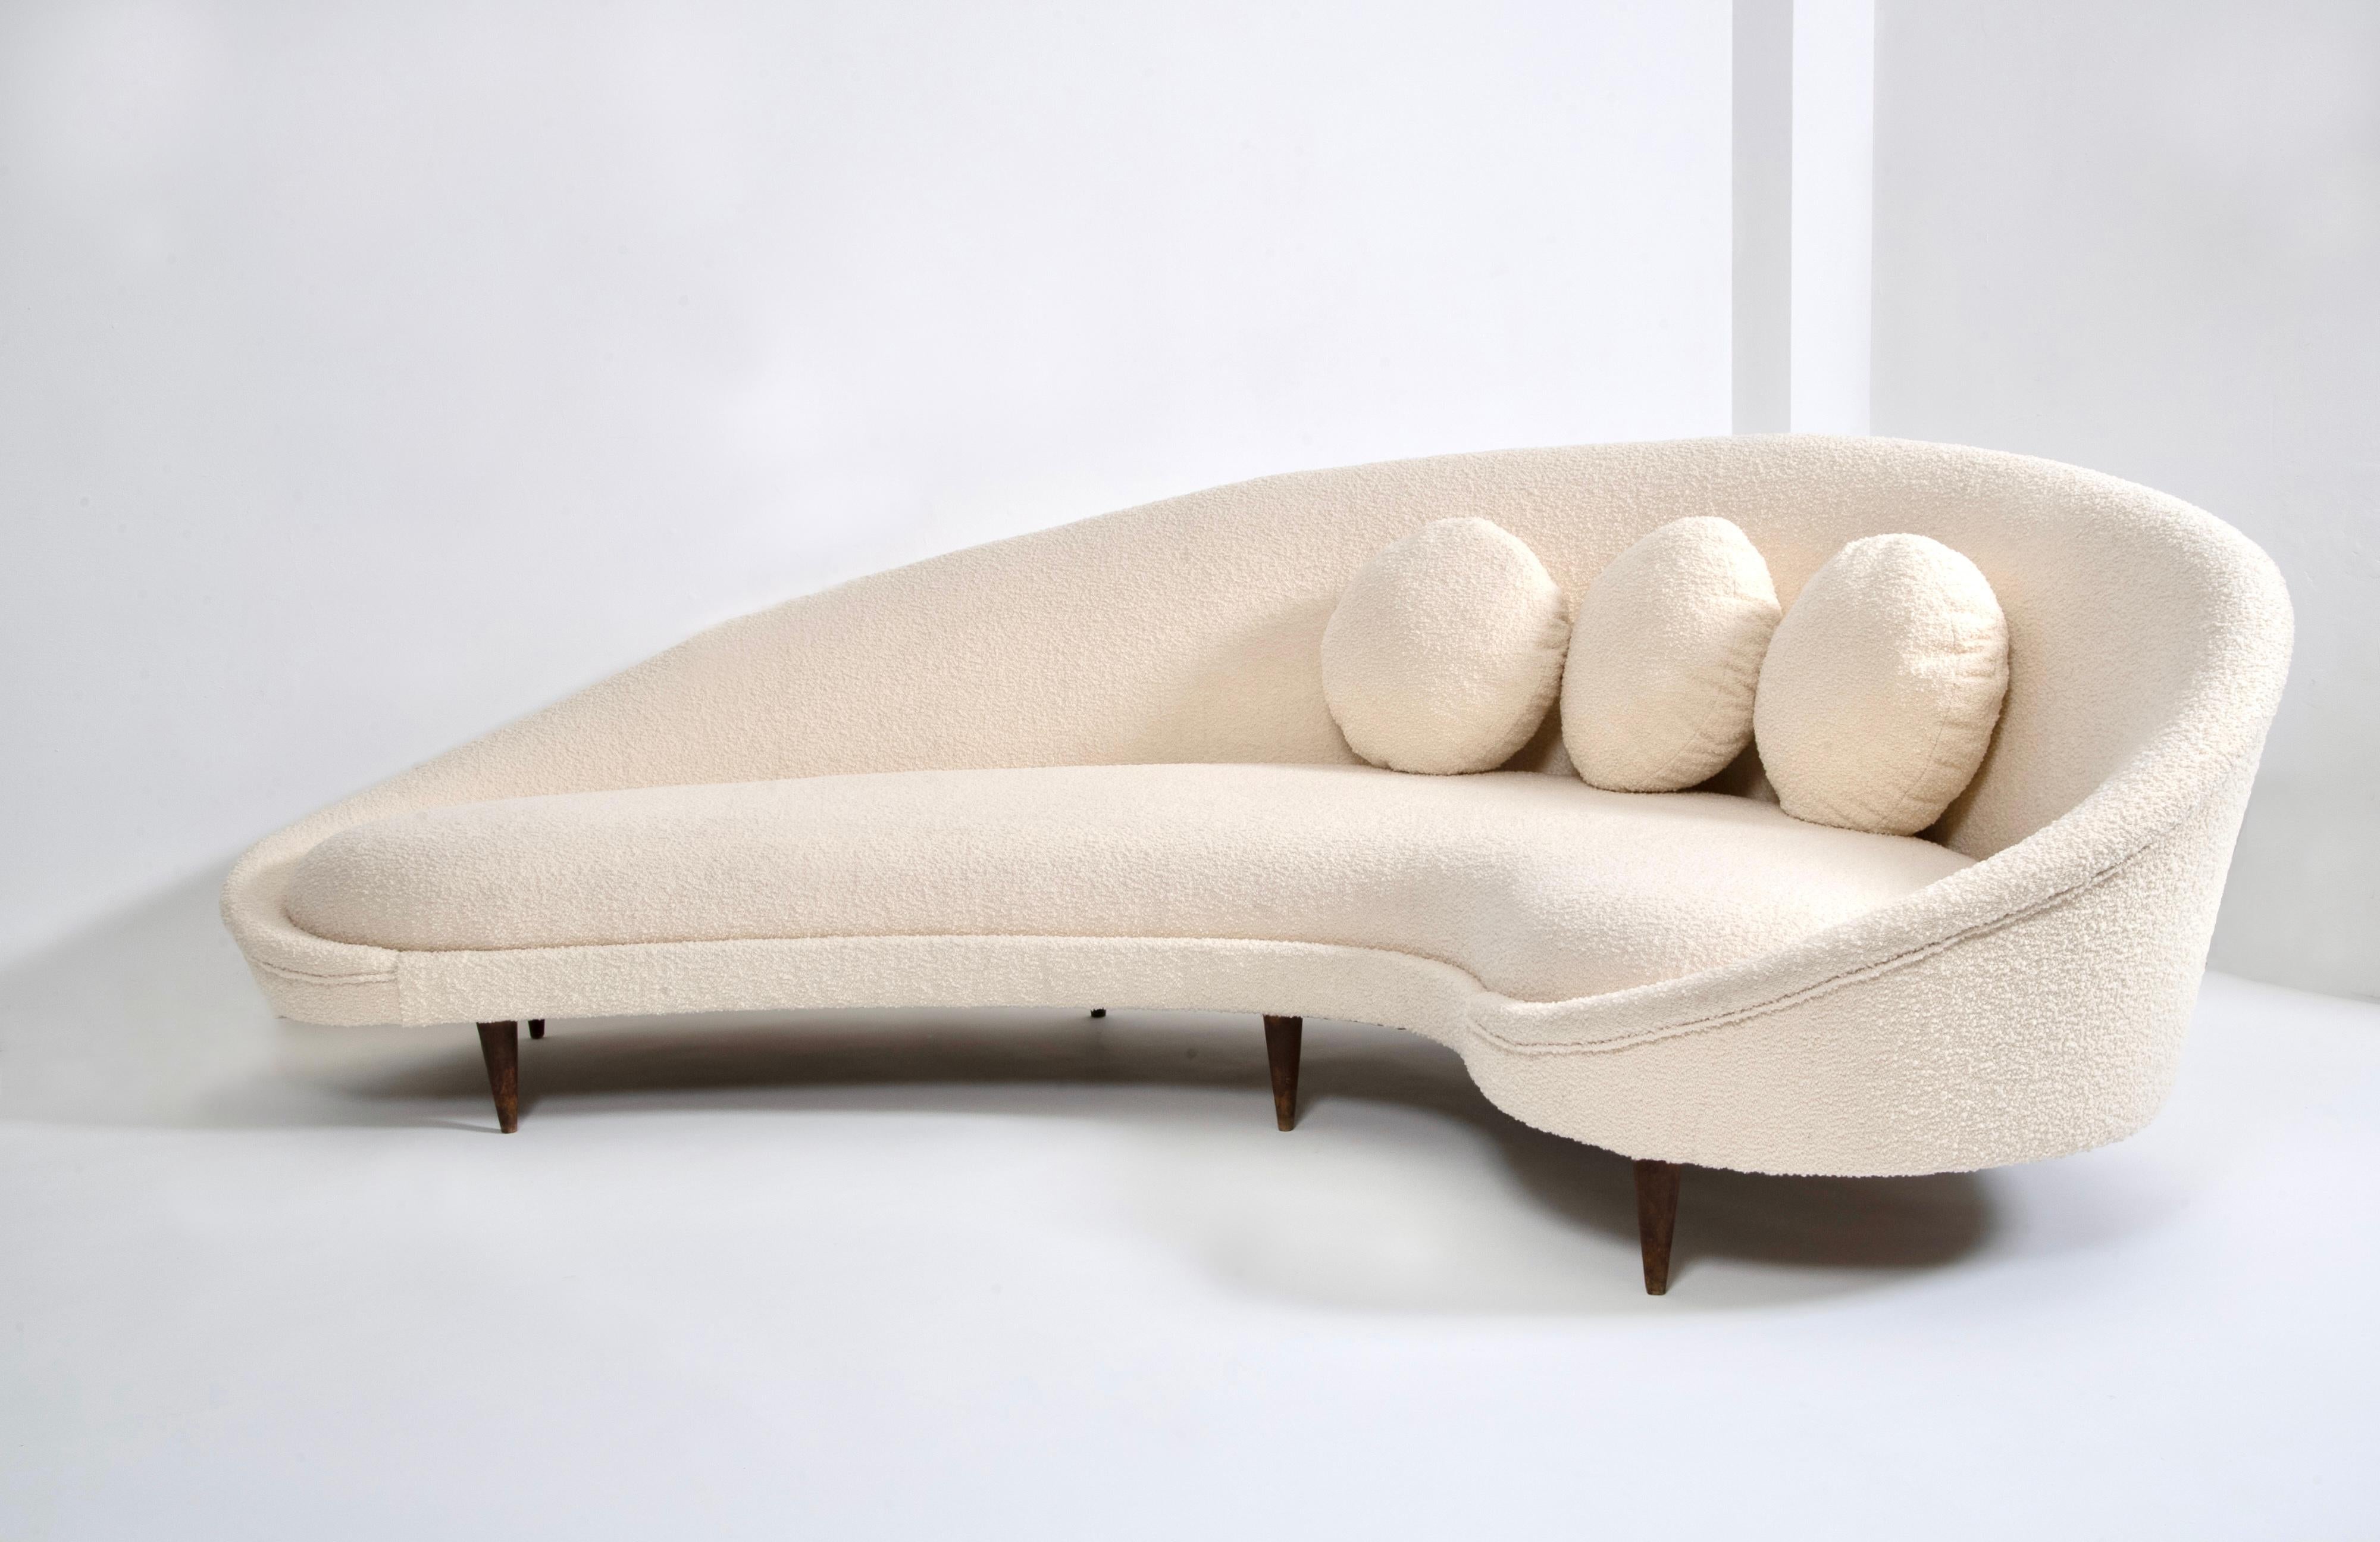 20th Century Federico Munari Curved Lounge Sofa, Italy, 1955 For Sale 1